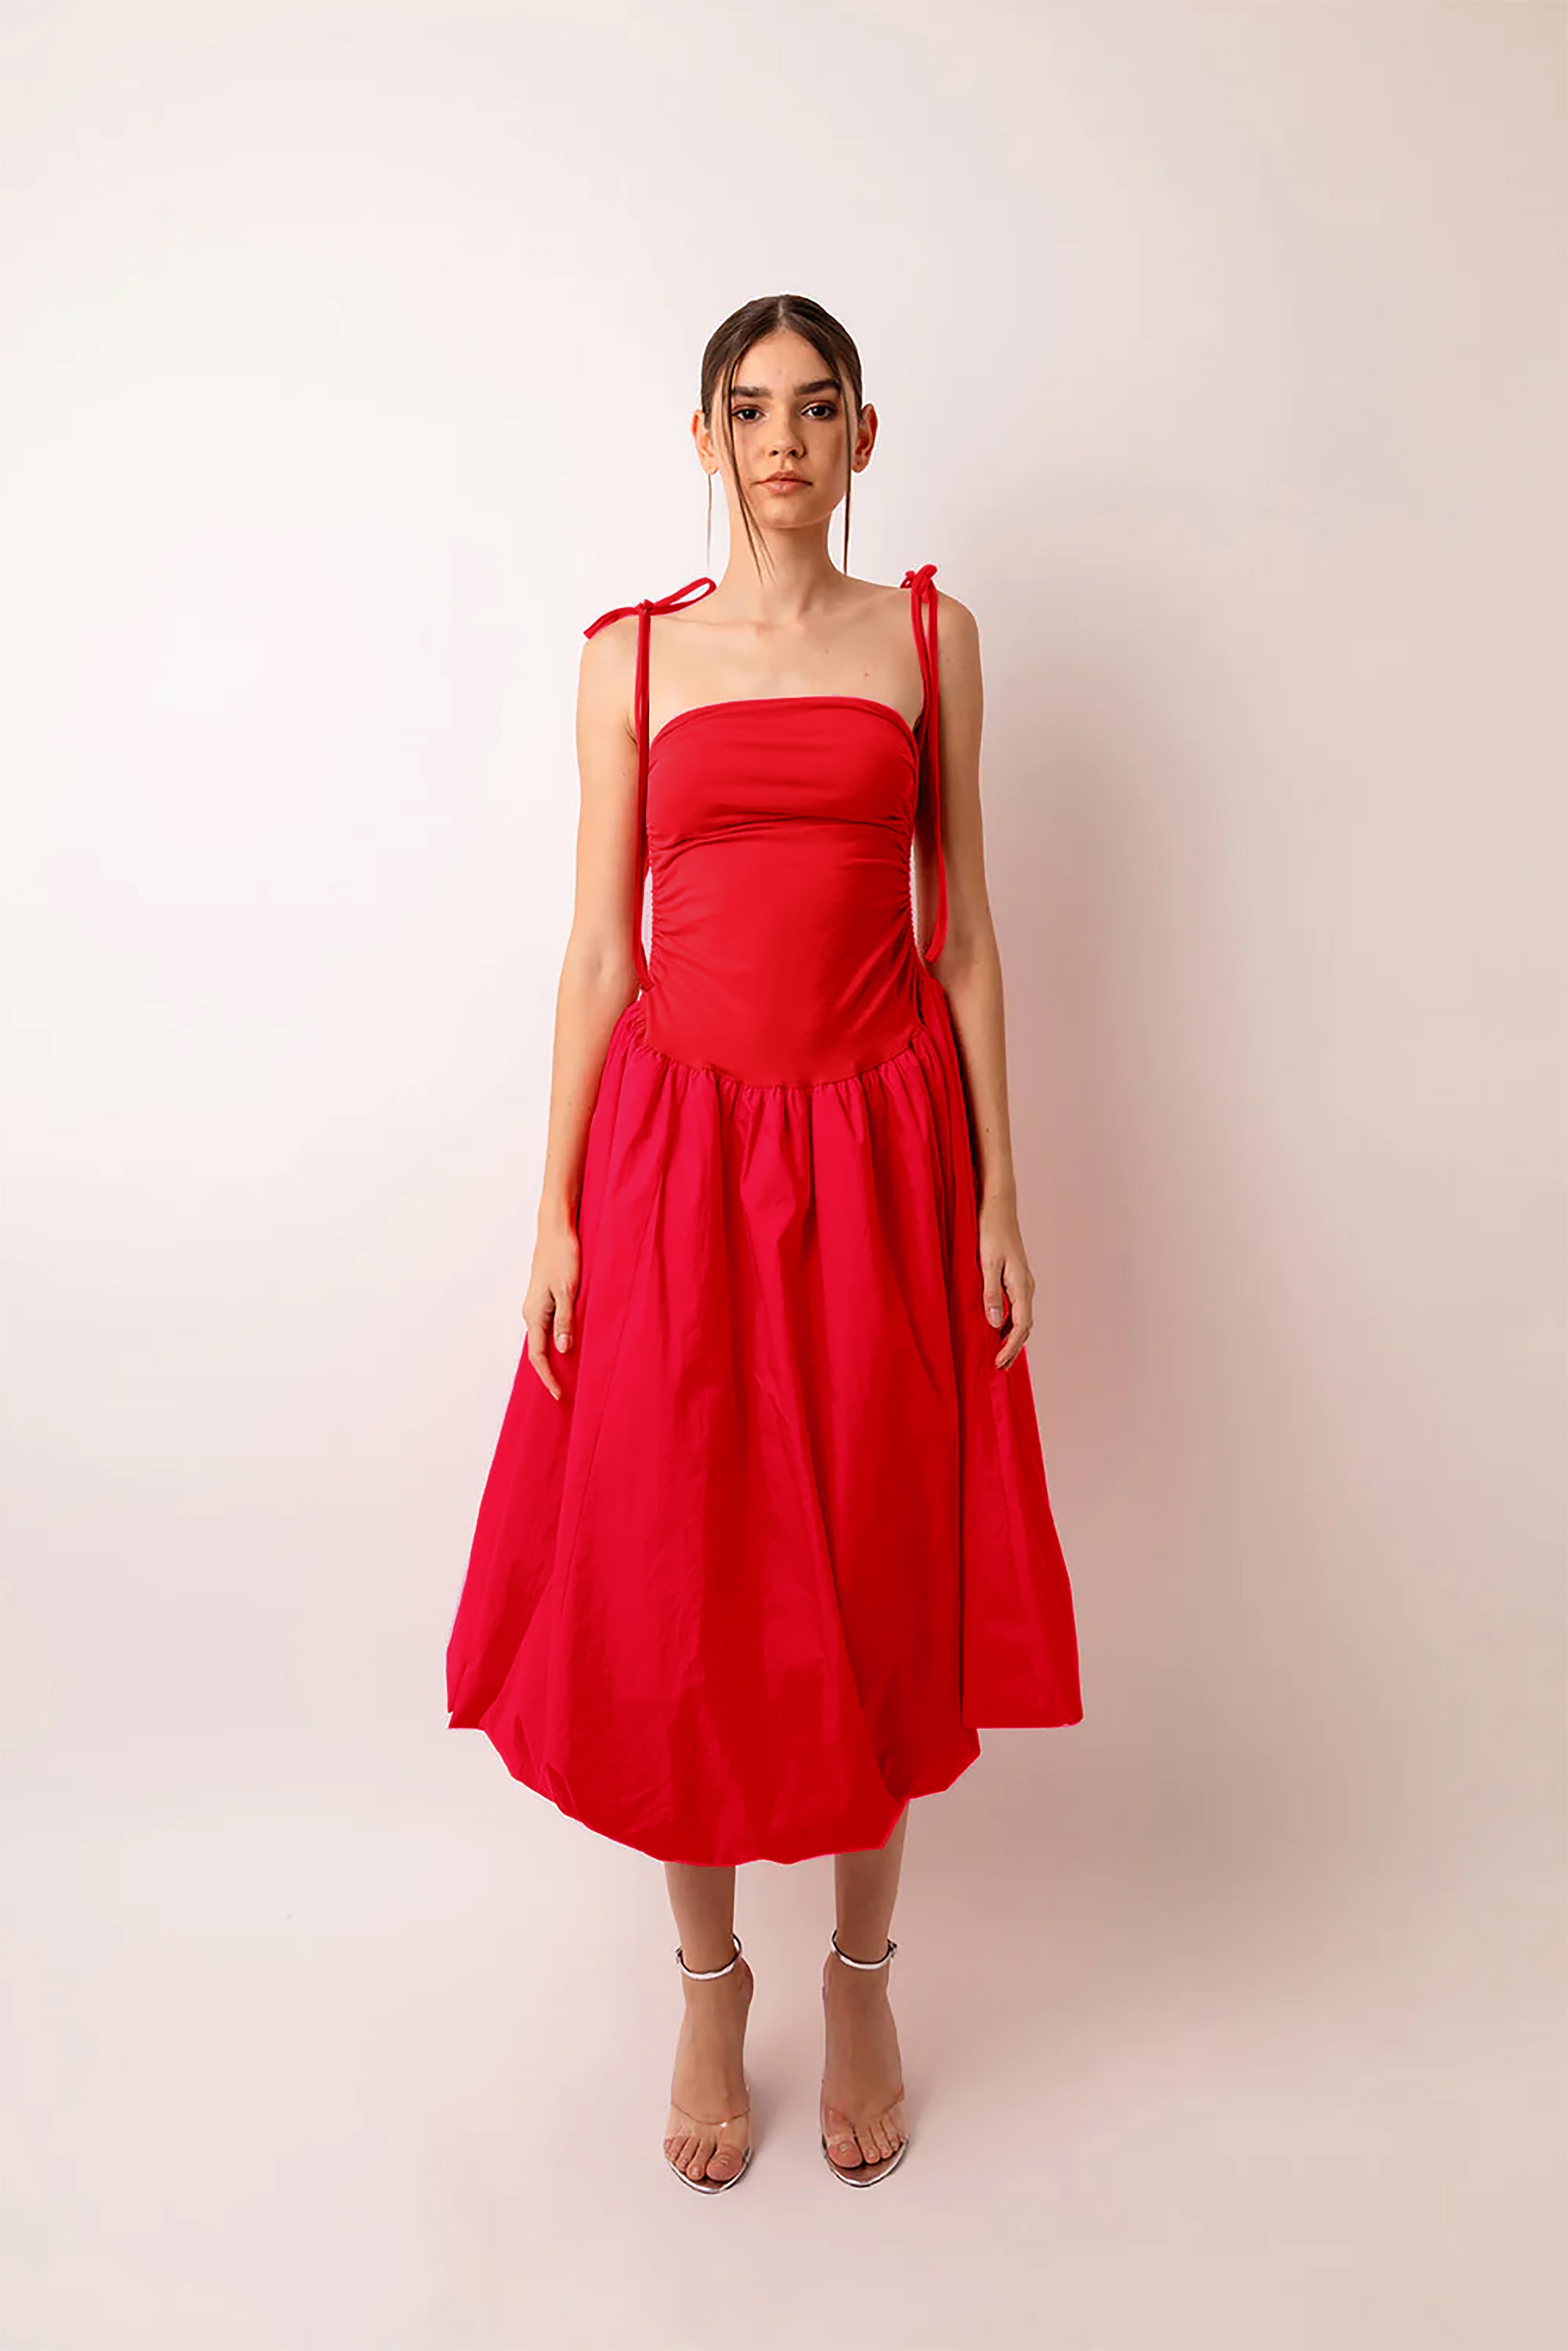 Alexa Cherry Red Puffball Dress